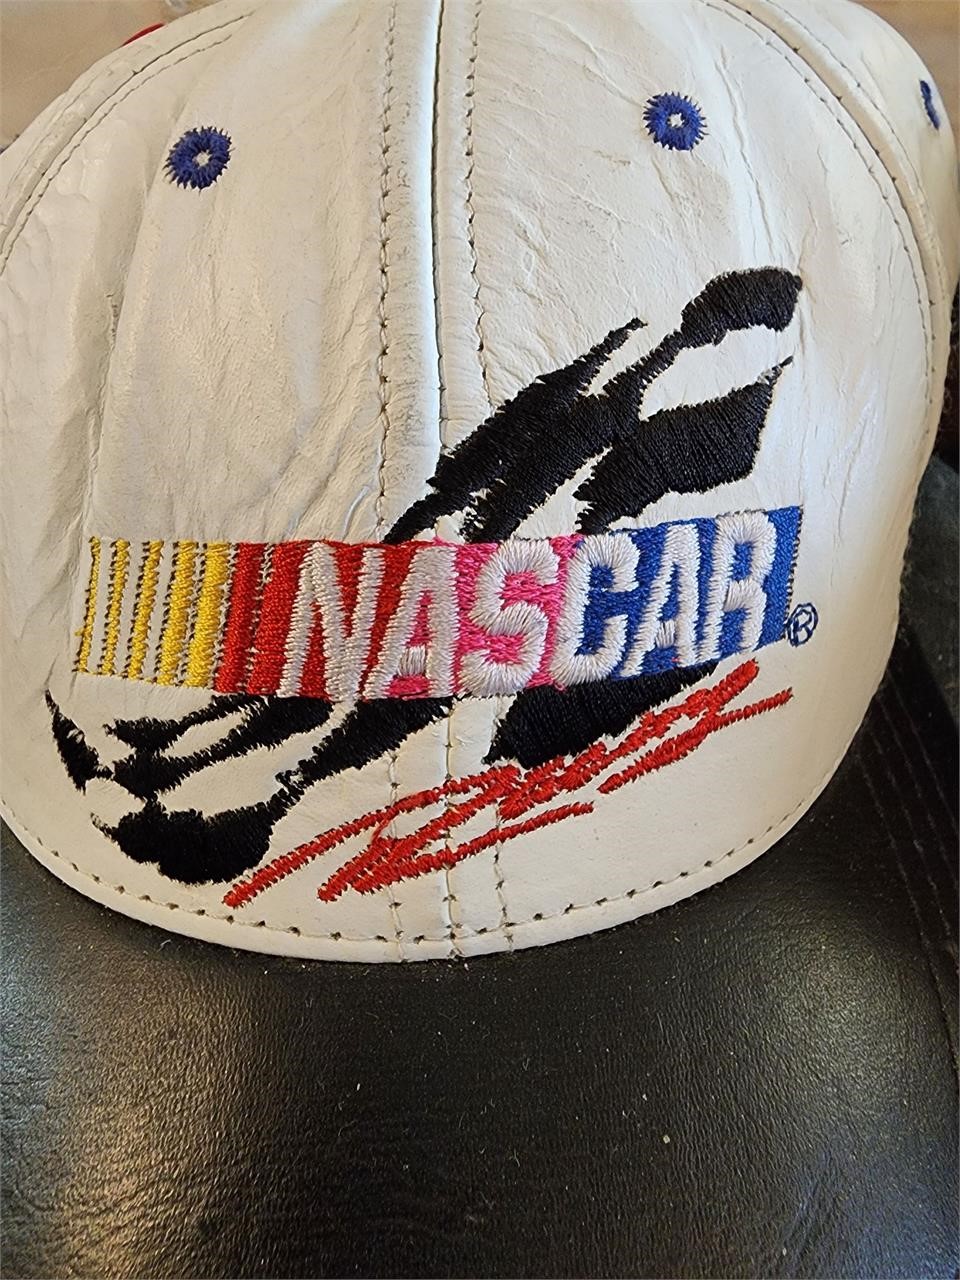 4 VTG Nas Car hats never worn 3 has tags